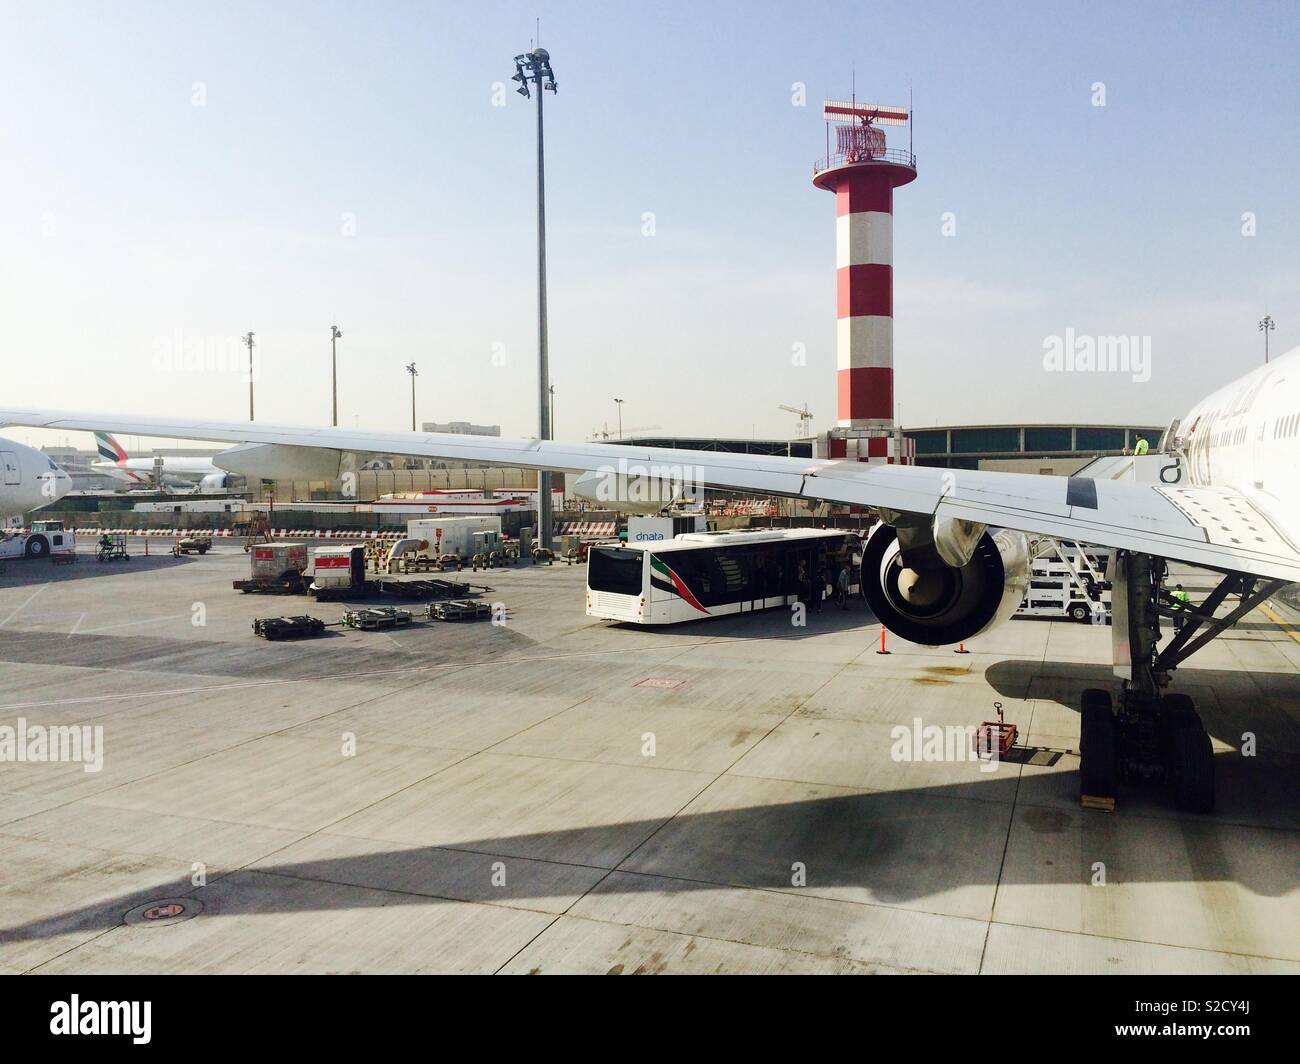 Dubai airport busy tarmac before departure of flight Stock Photo